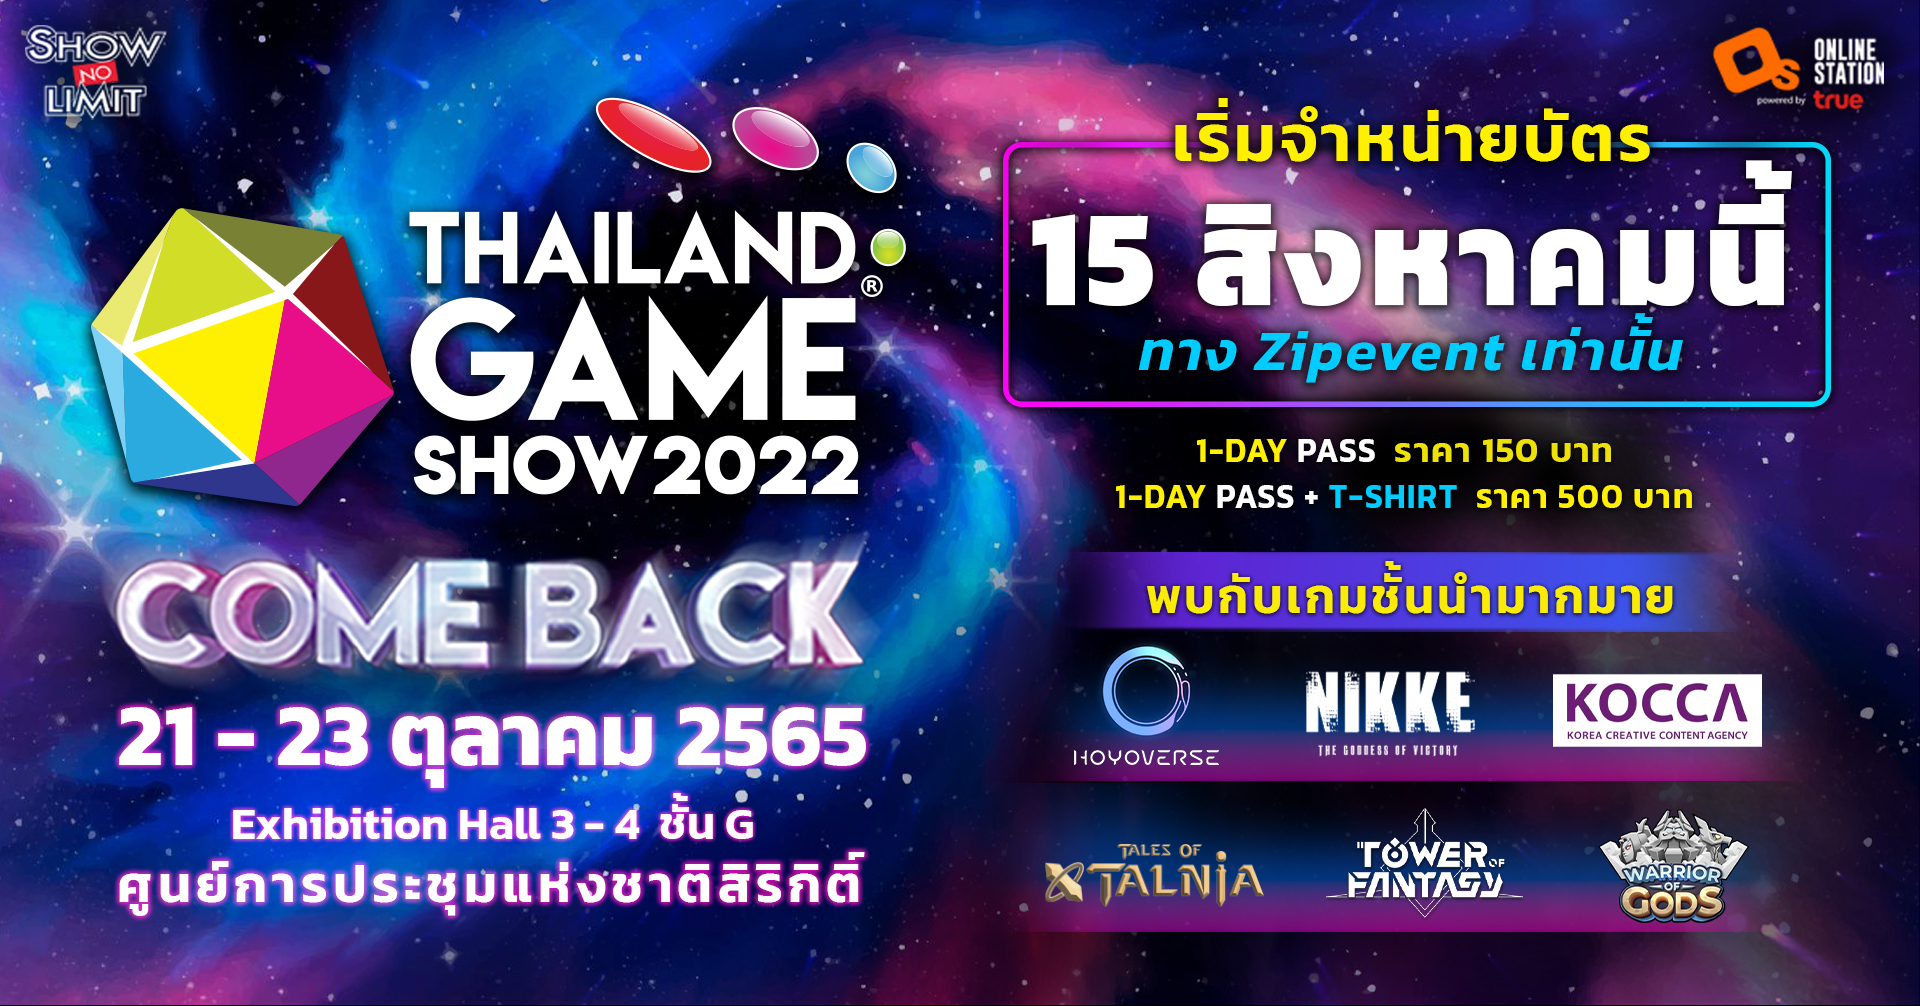 Thailand Game Show 2022: Comeback เตรียมเปิดให้ซื้อบัตร 15 สิงหาคมนี้! 